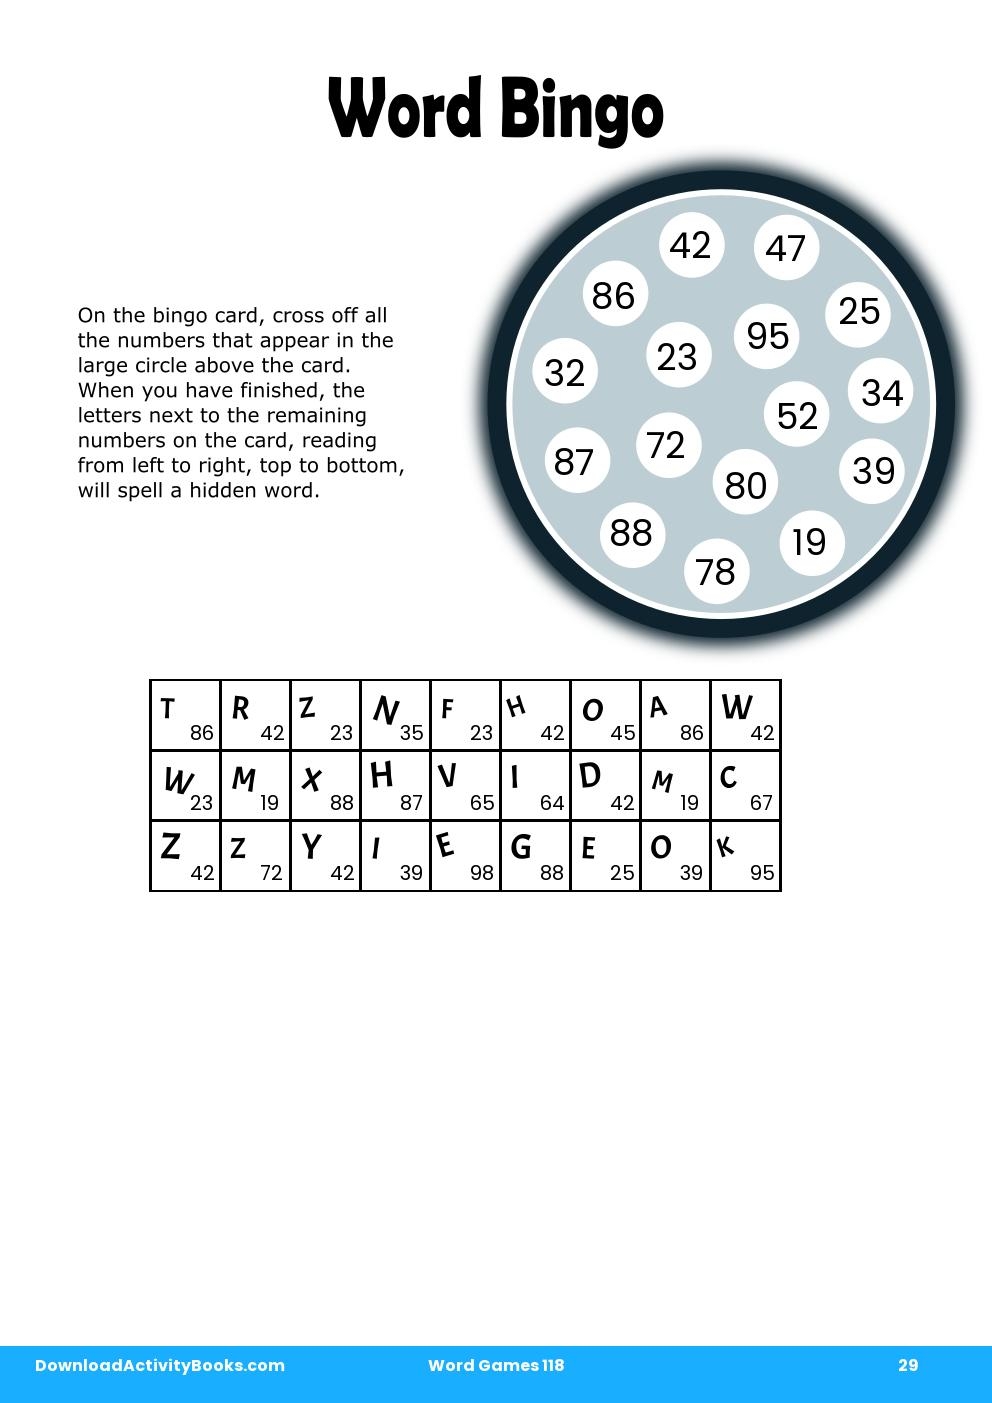 Word Bingo in Word Games 118